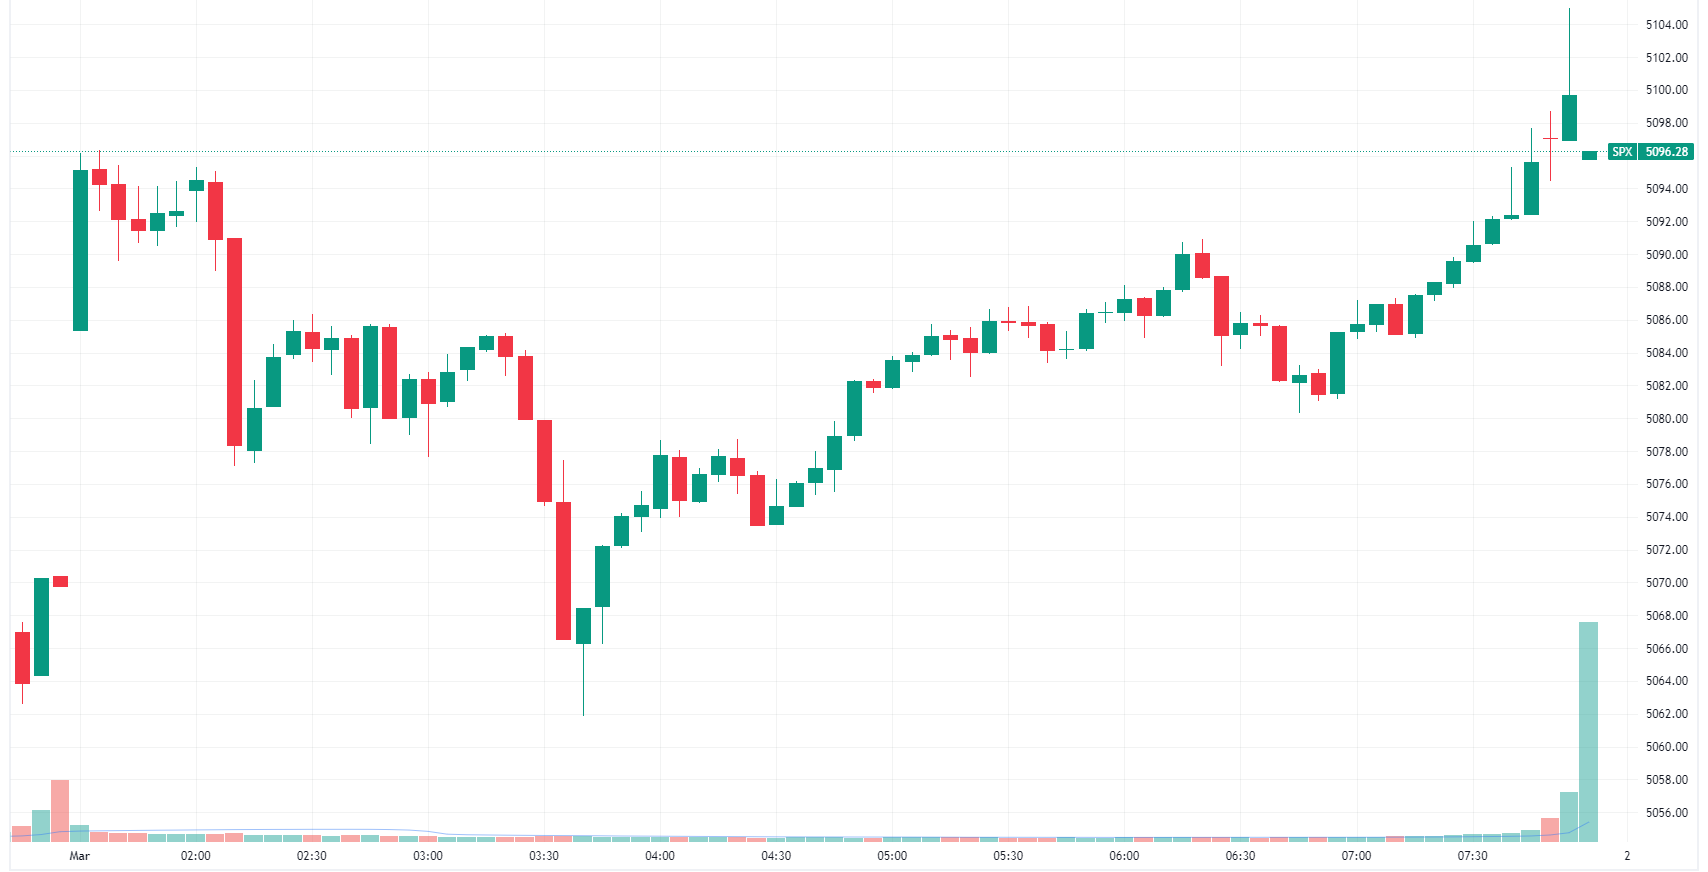 S&P 500 closes at best levels despite a choppy open (Source: TradingView)